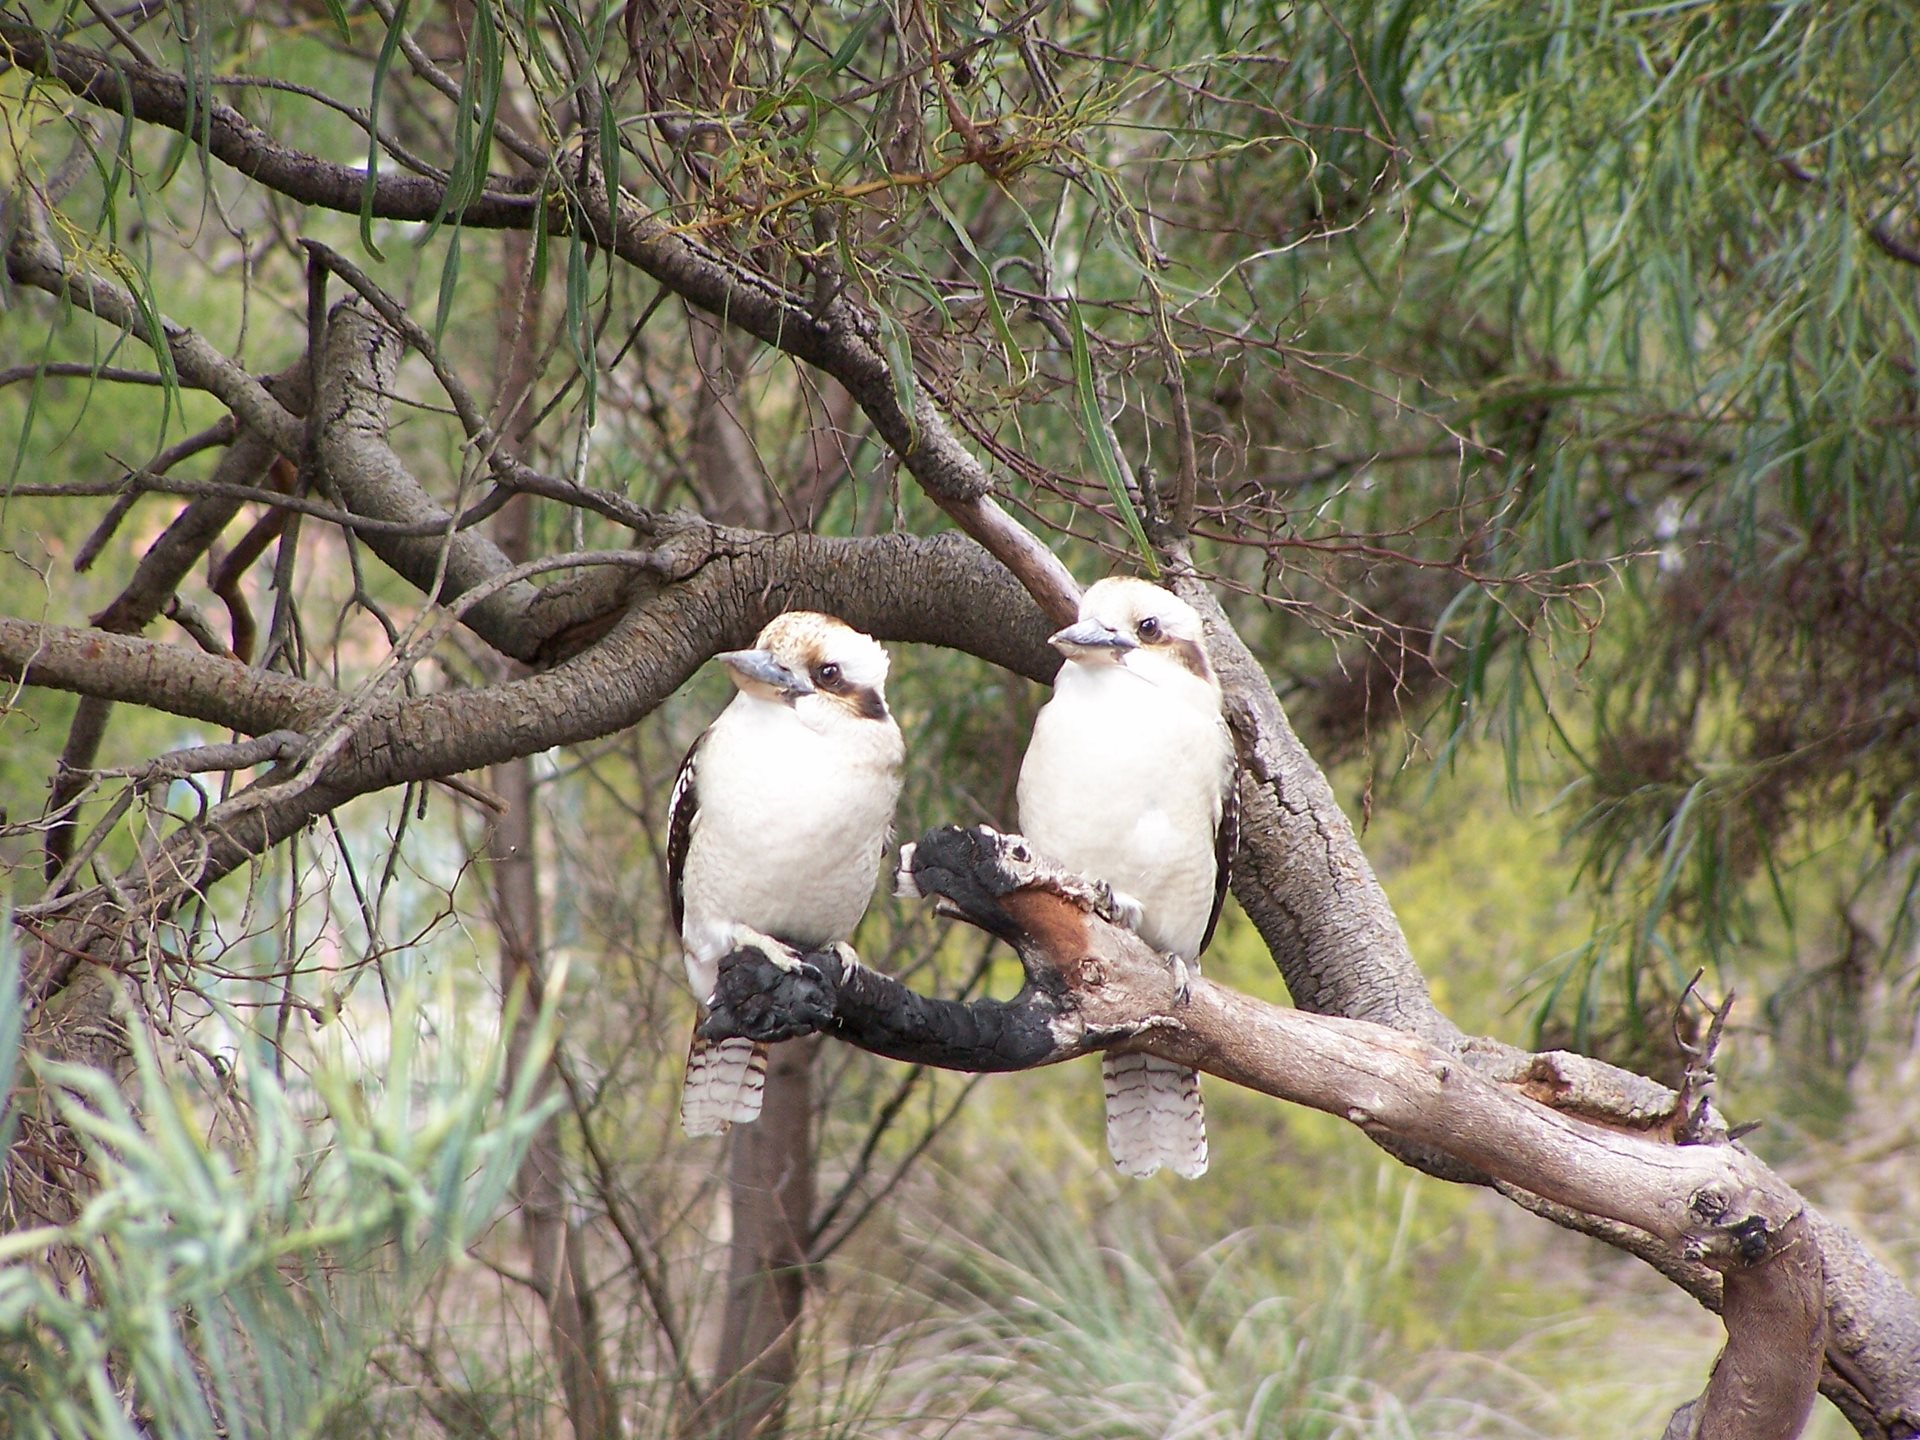 Two kookaburras on a branch.